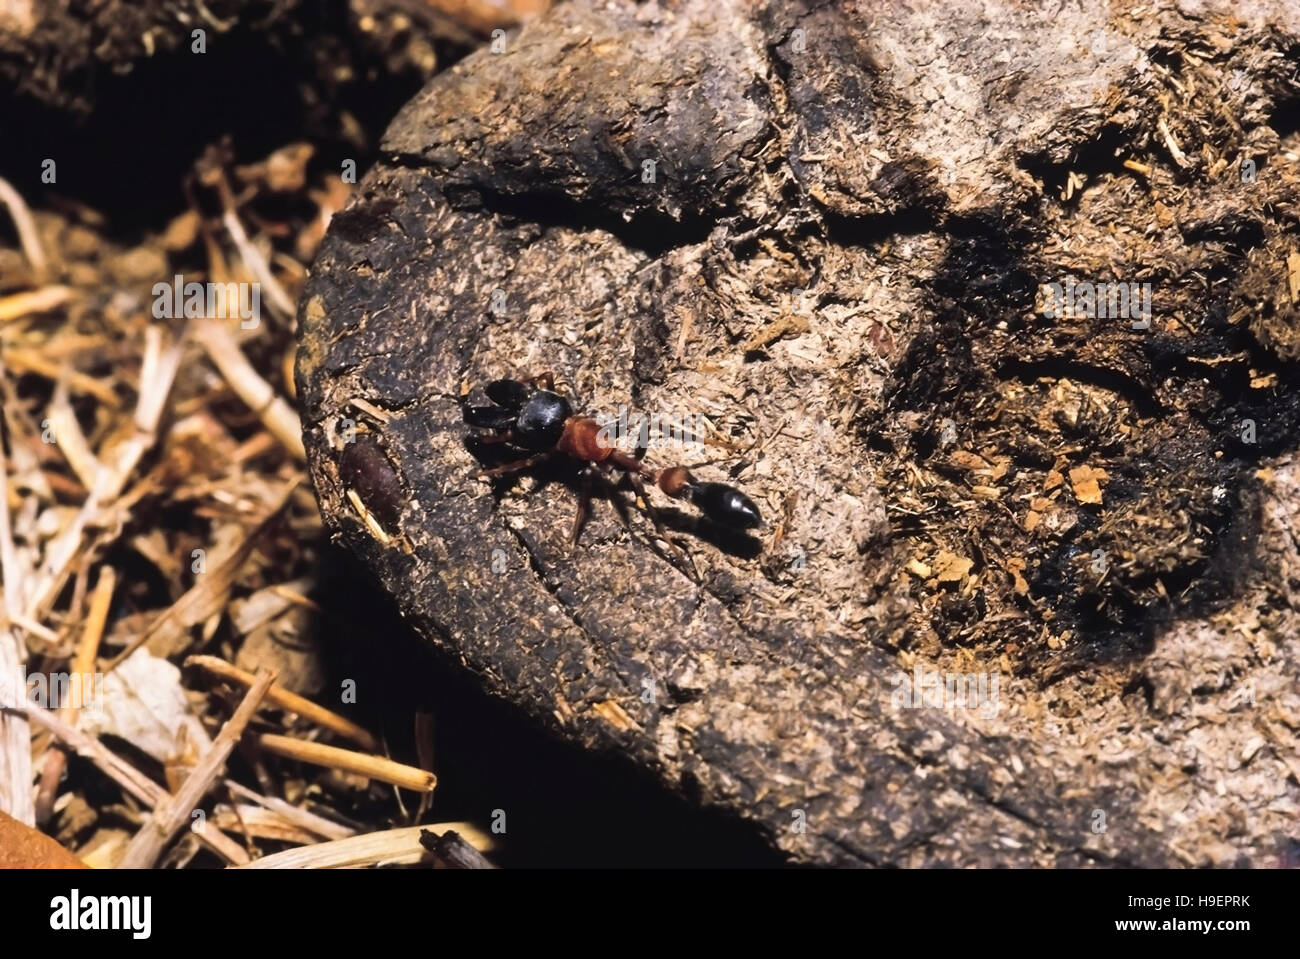 Ant-imitar araña. Karnataka, India. Foto de stock